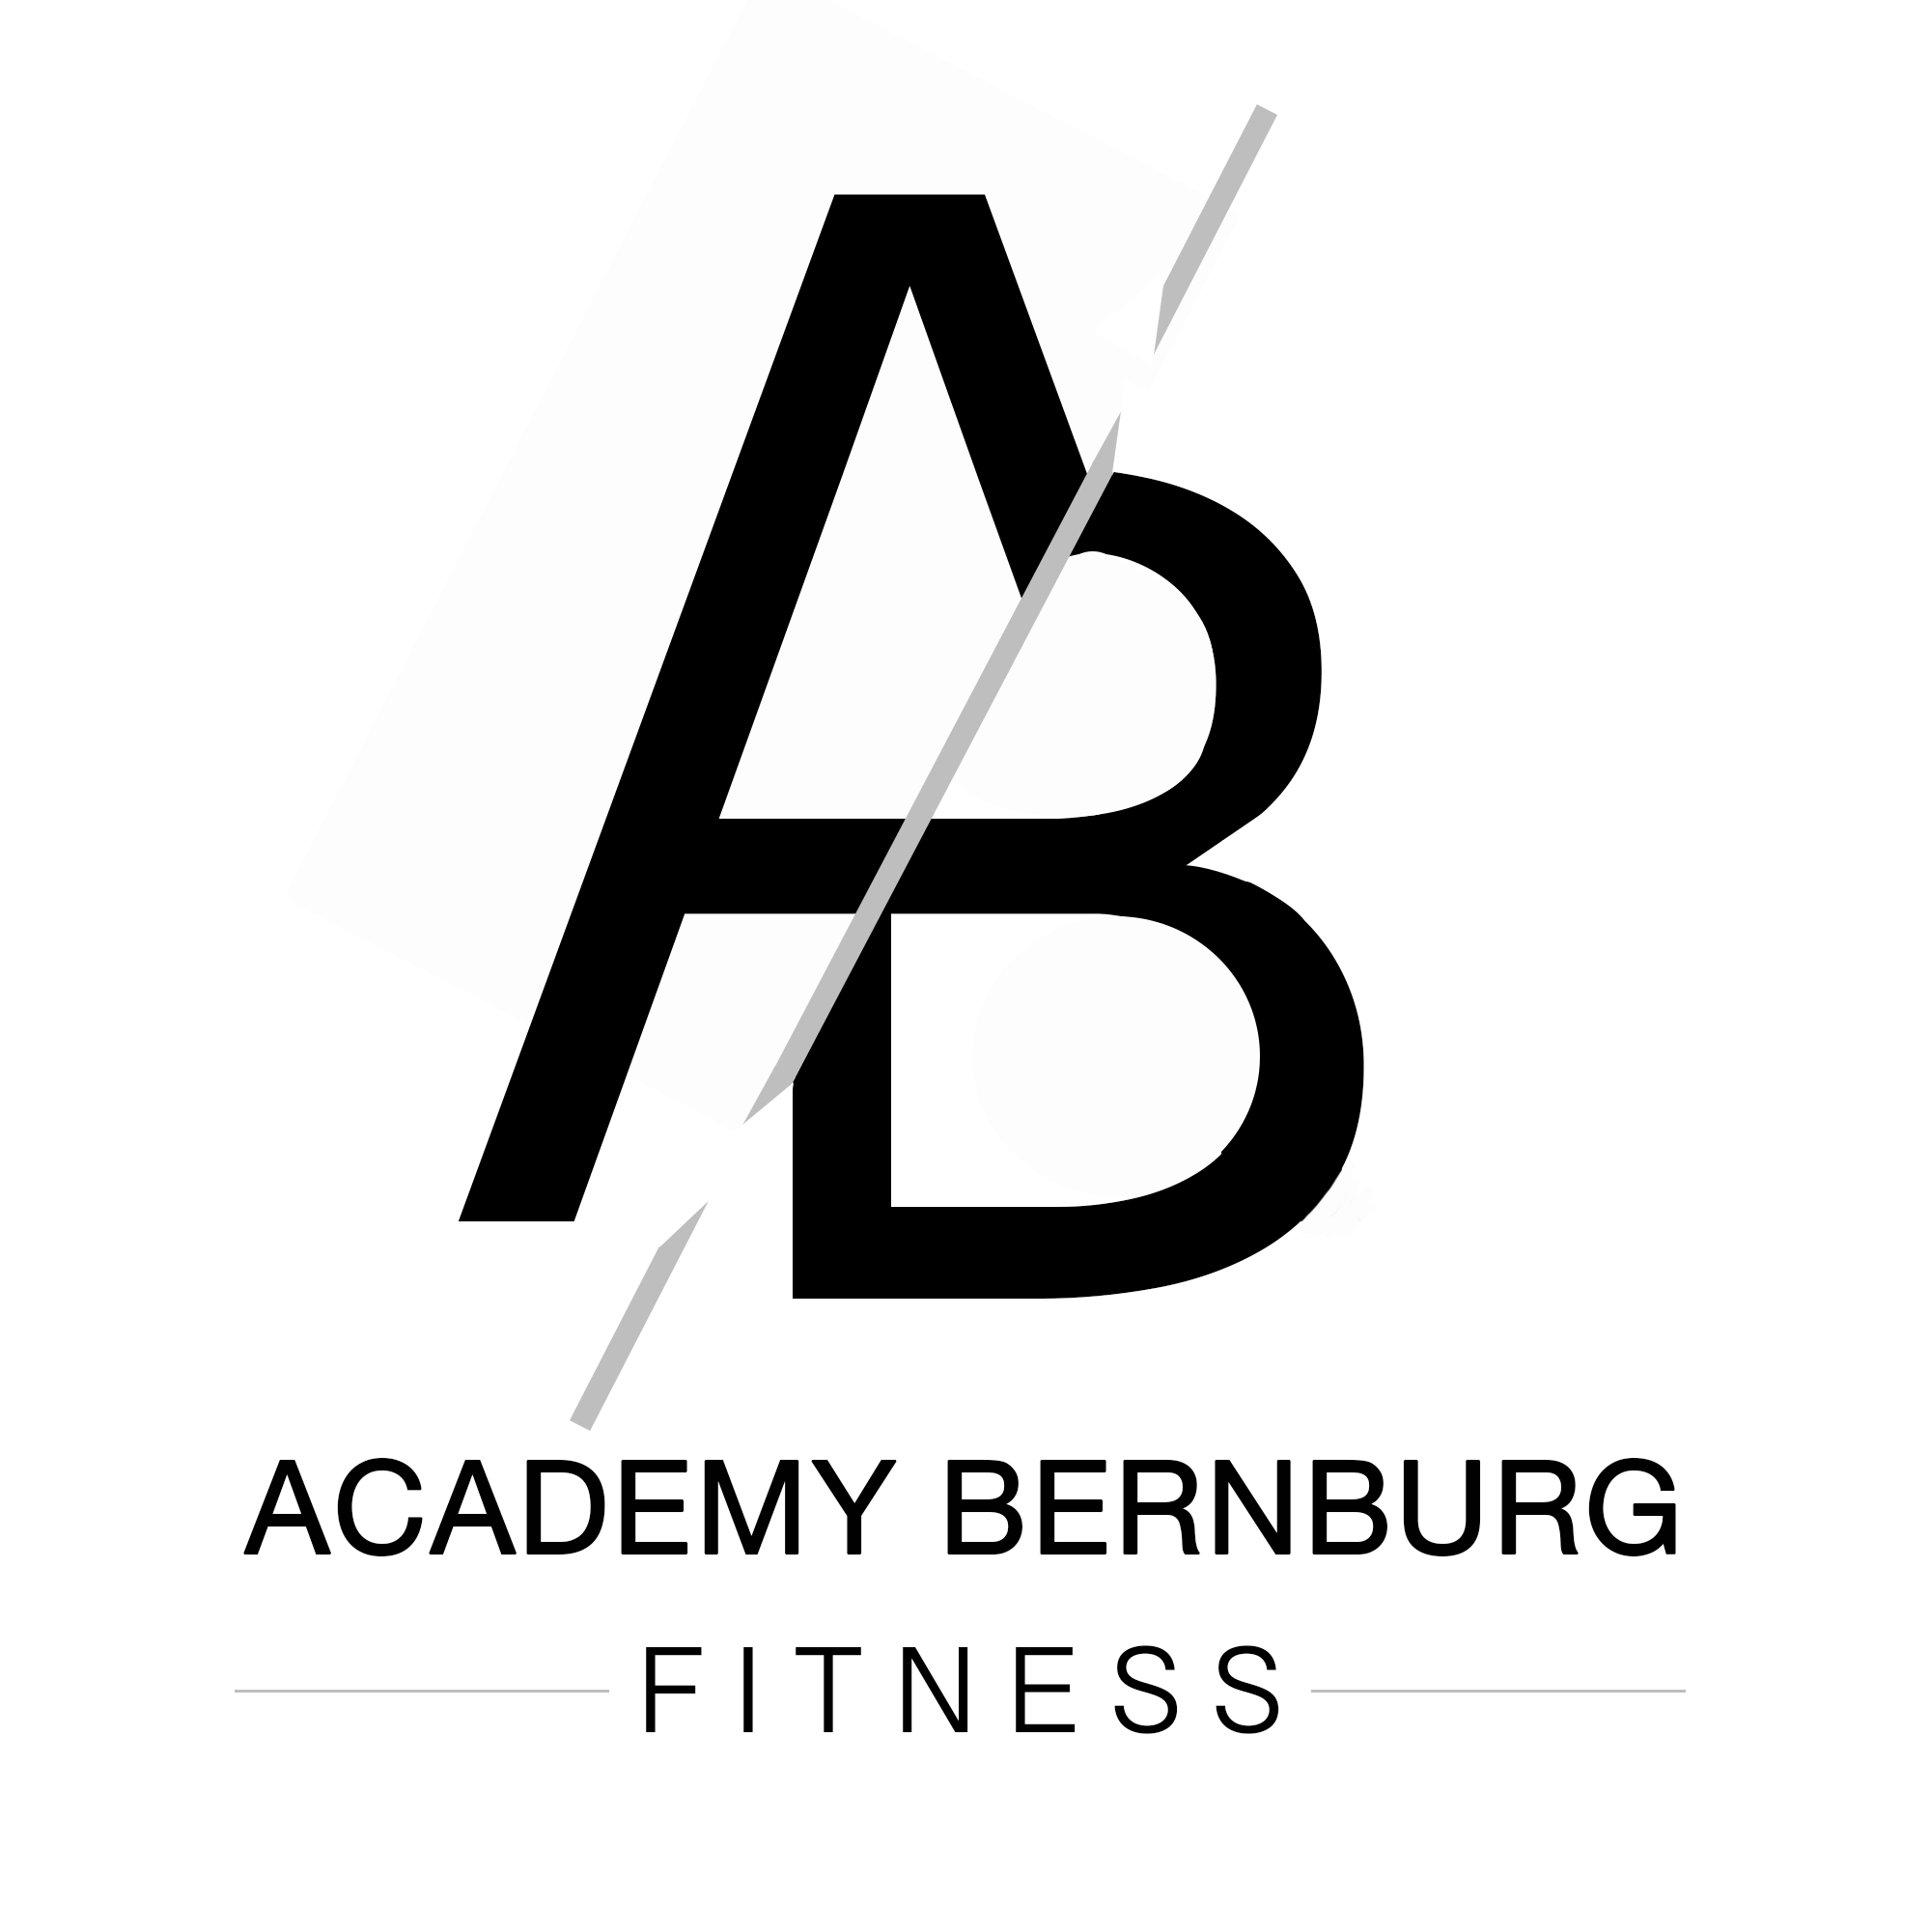 Fitness Studio Academy Bernburg